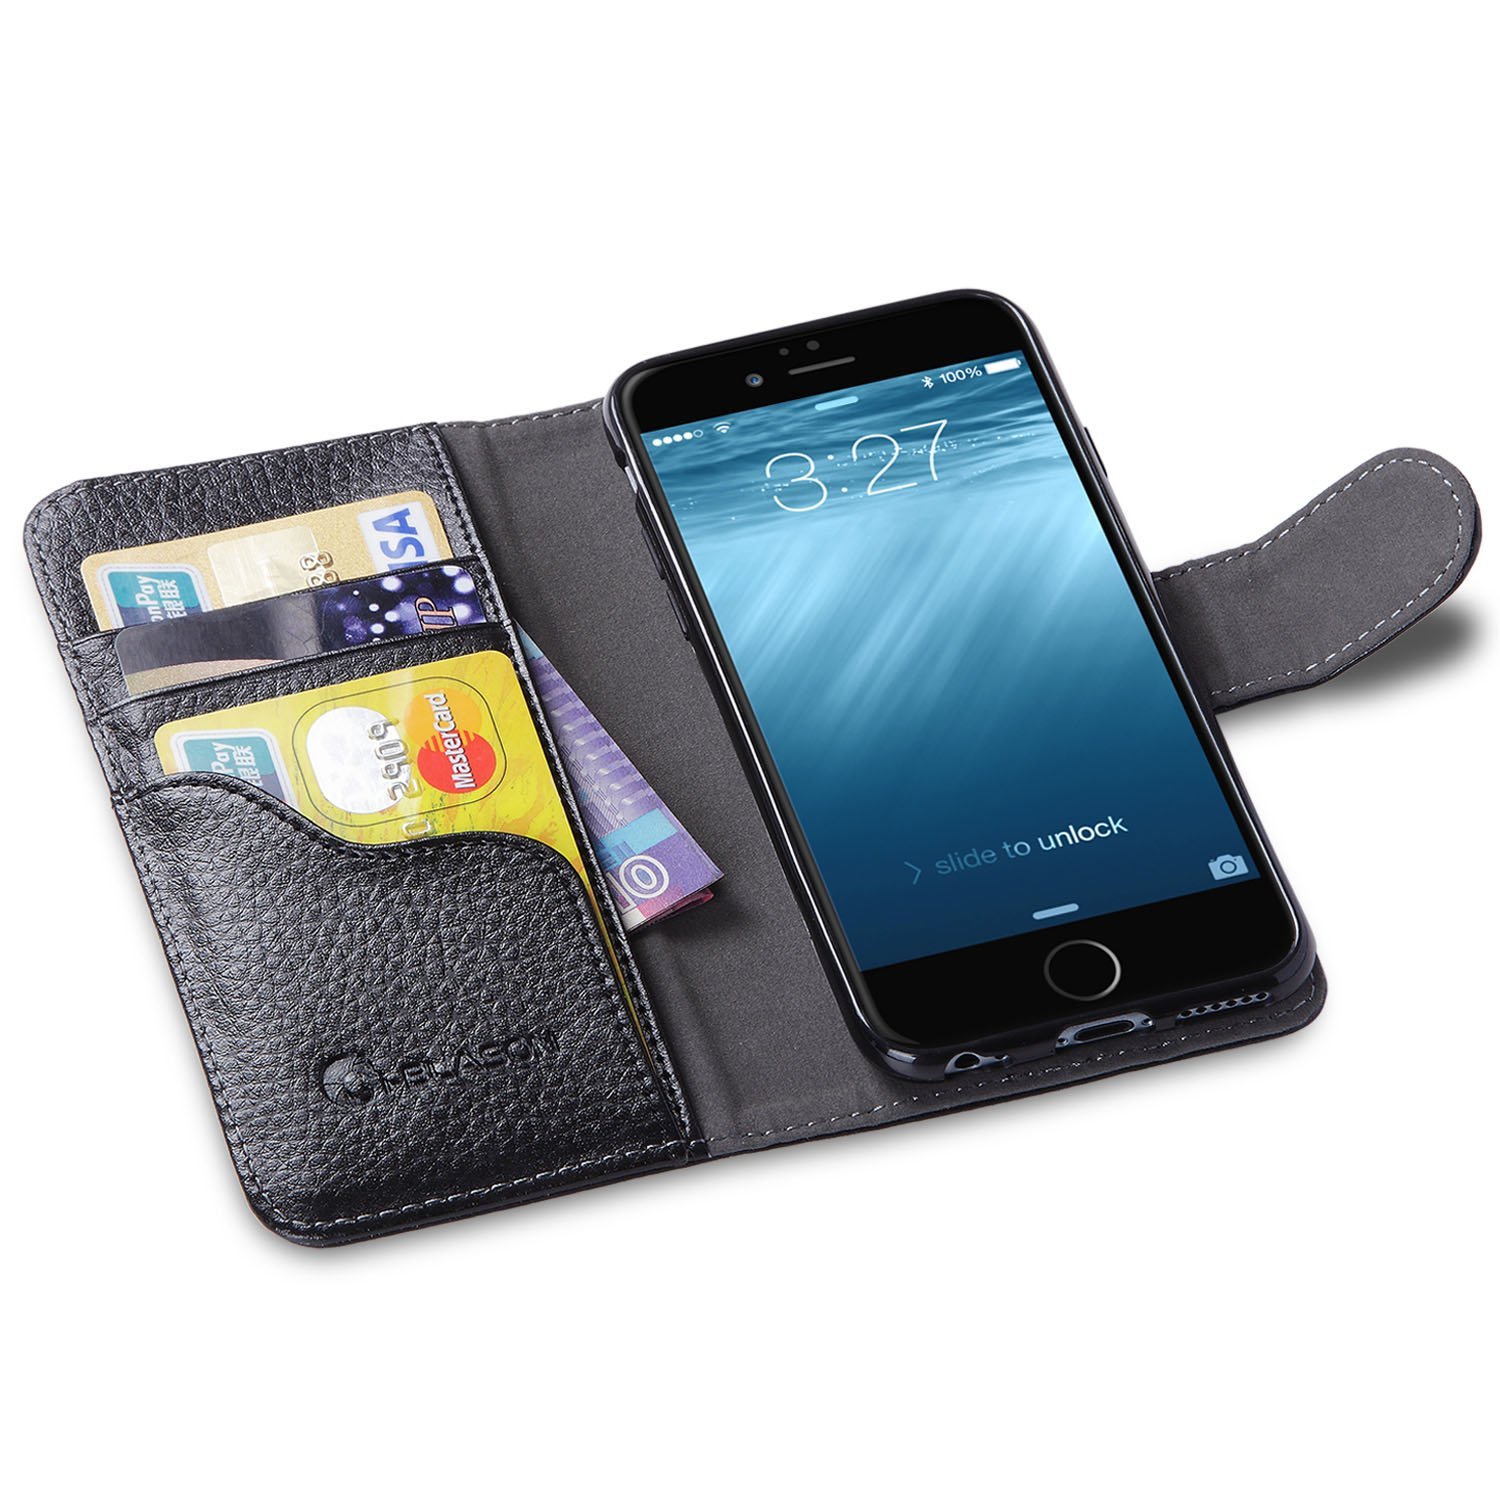 iPhone 6 Wallet Cases roundup | MacRumors Forums